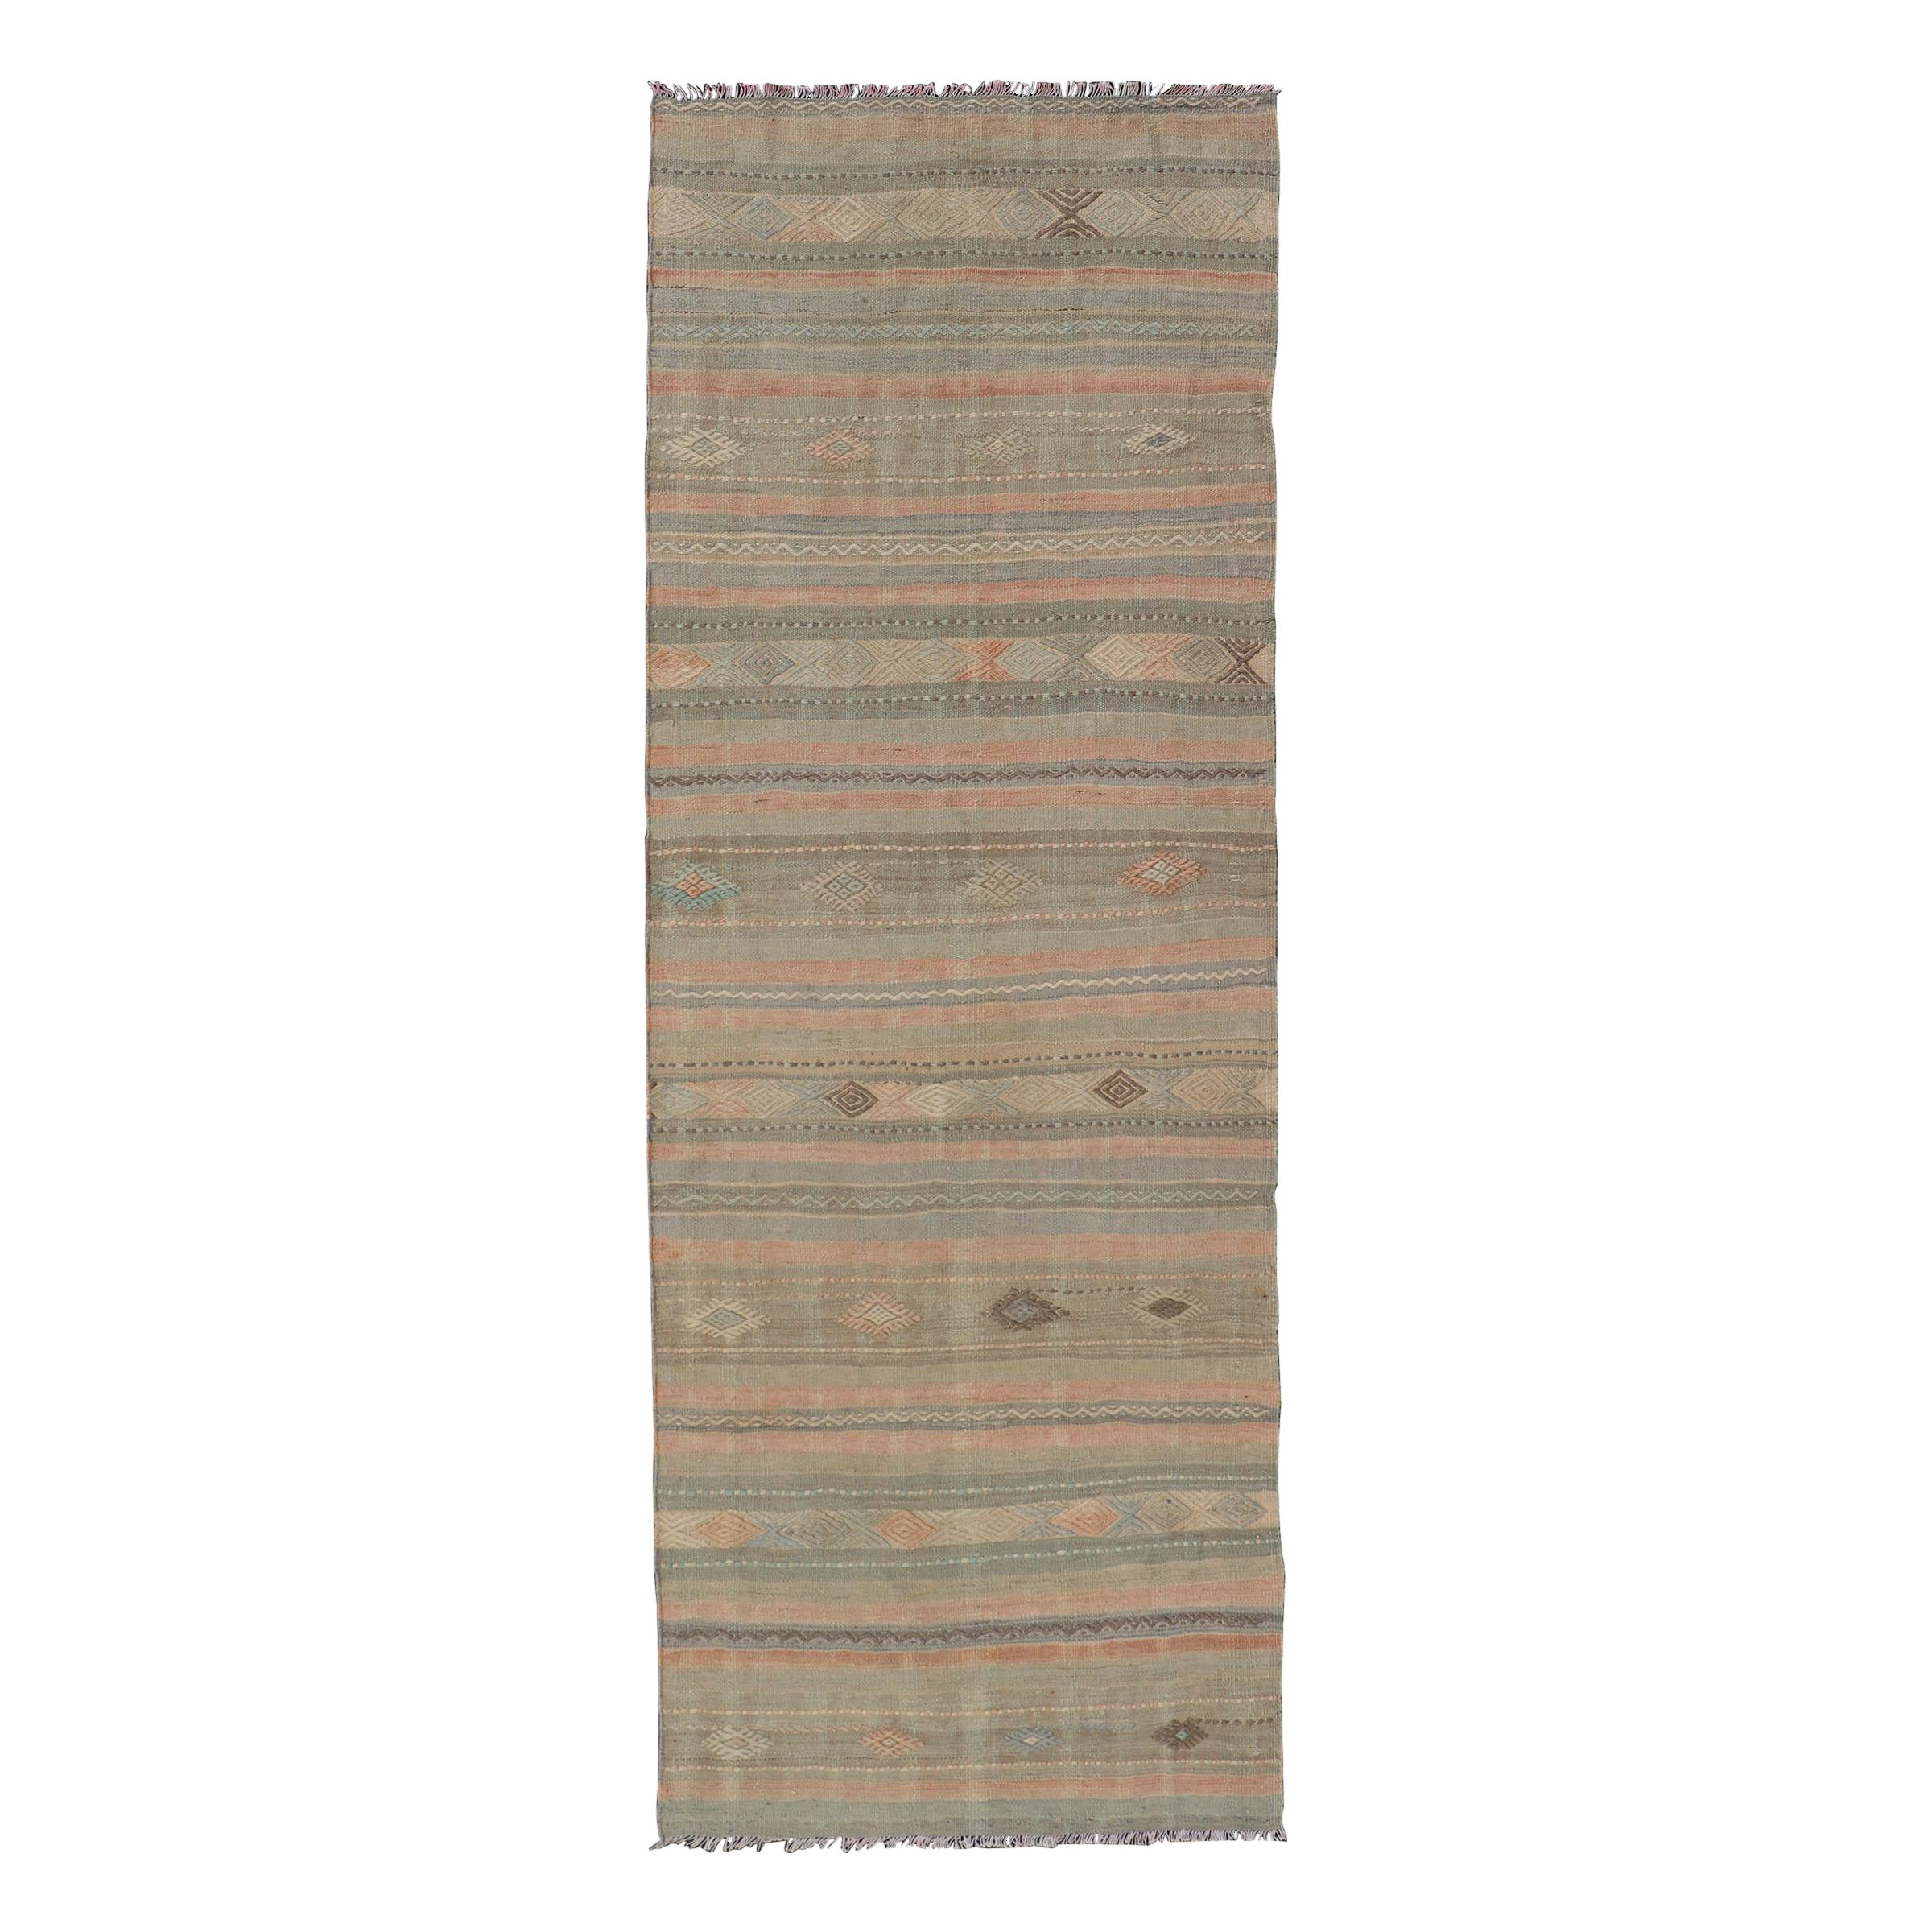 Stripe Vintage Turkish Kilim Flat-Weave Runner with Geometric Tribal Design